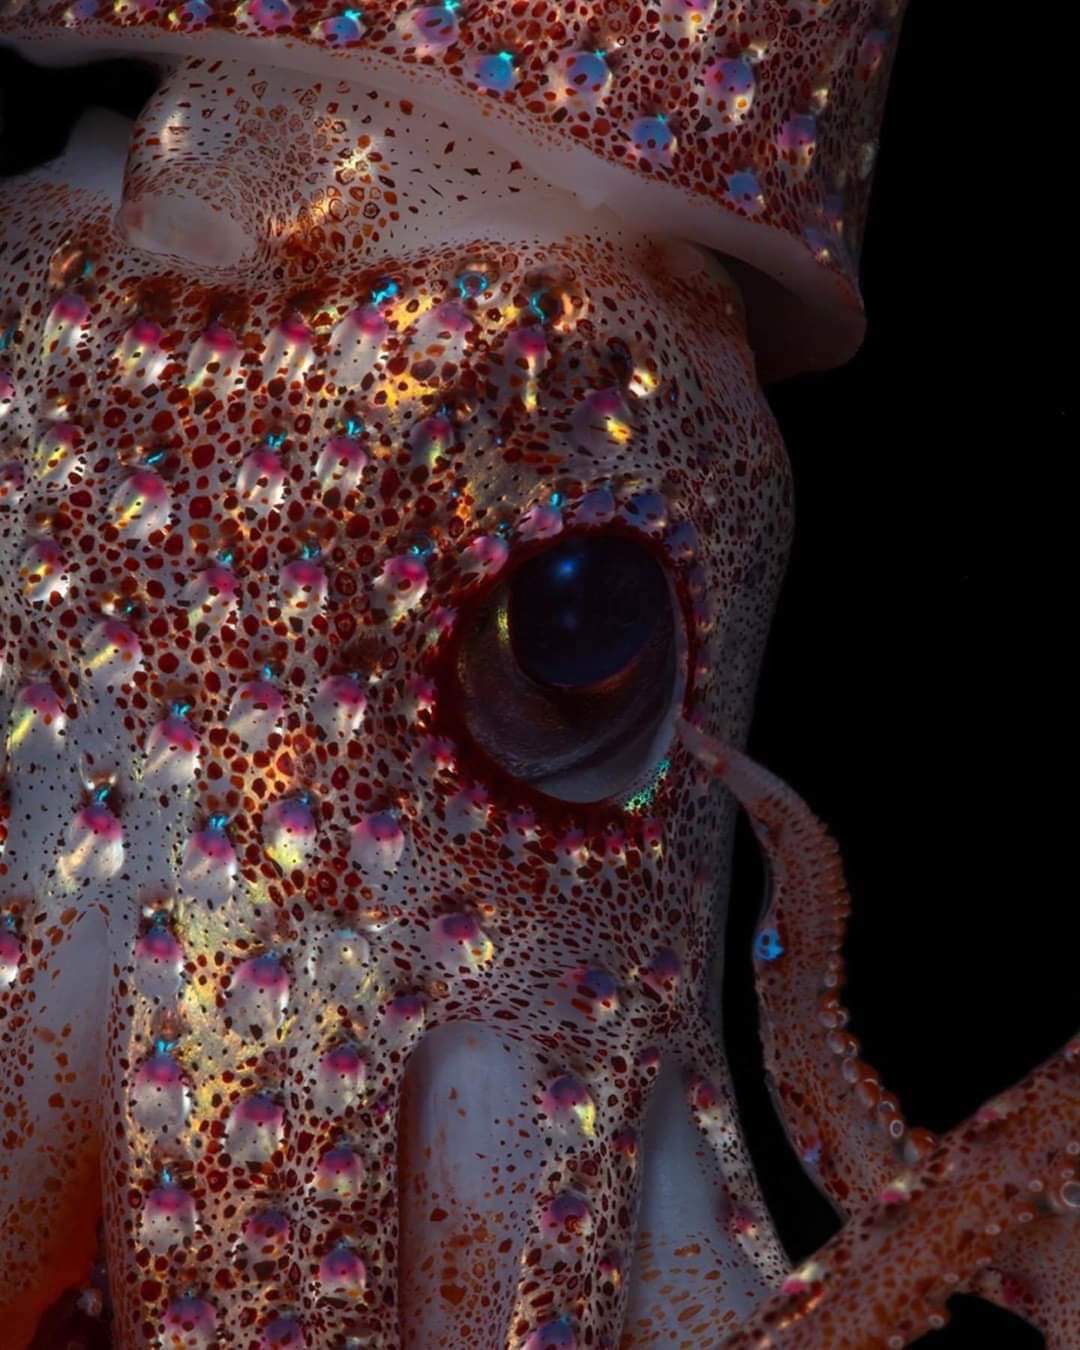 strawberry squid found in the ocean's twilight zone